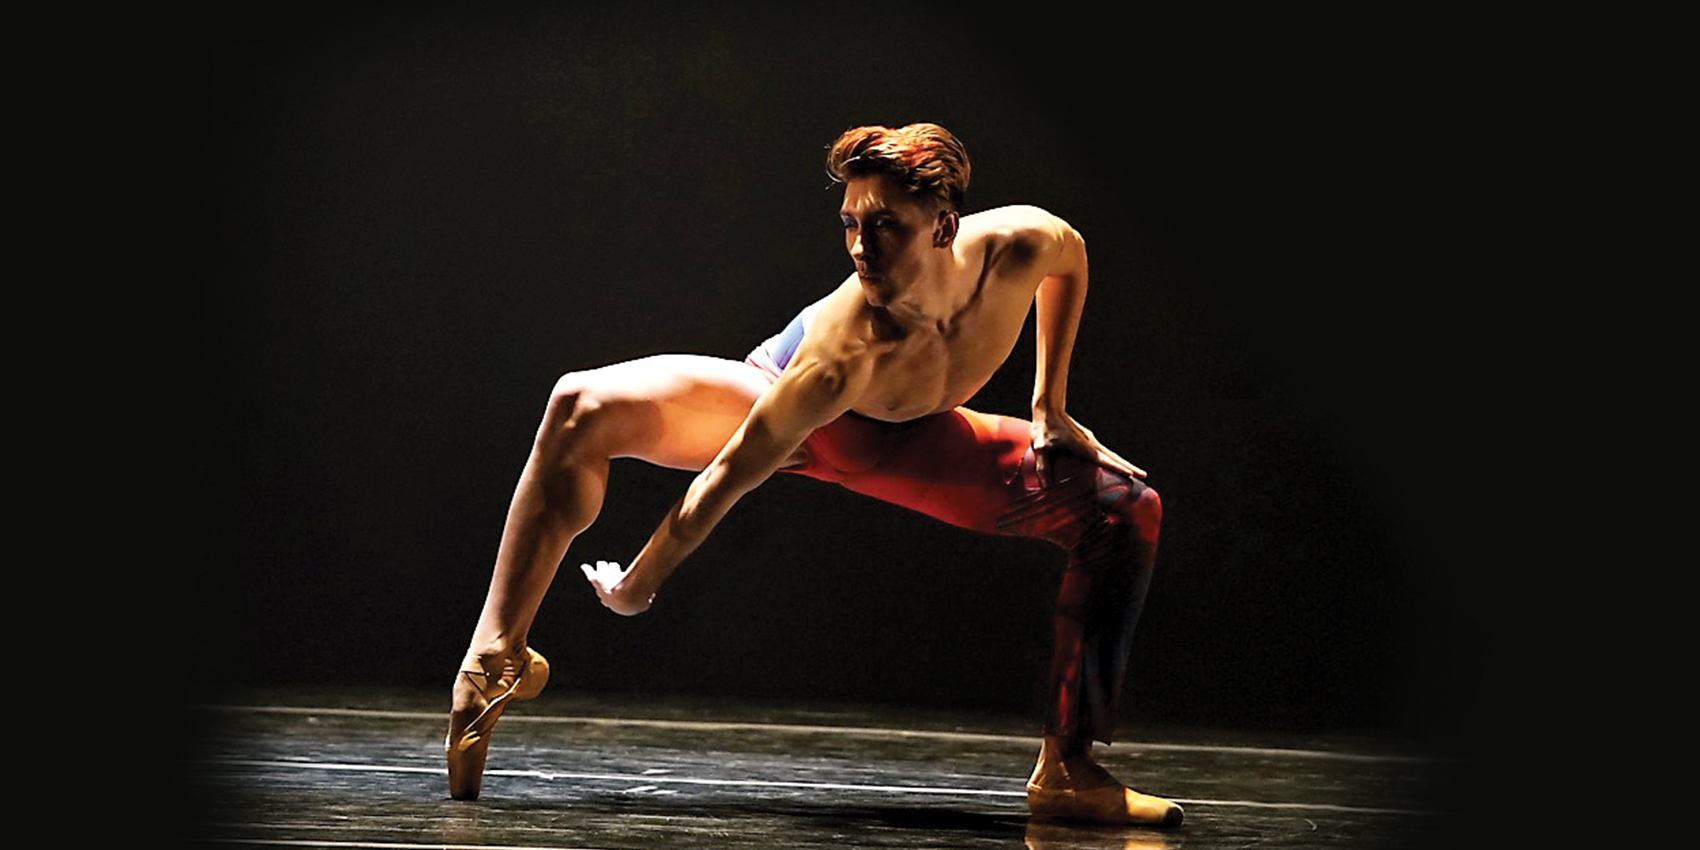 Complexions Contemporary Ballet